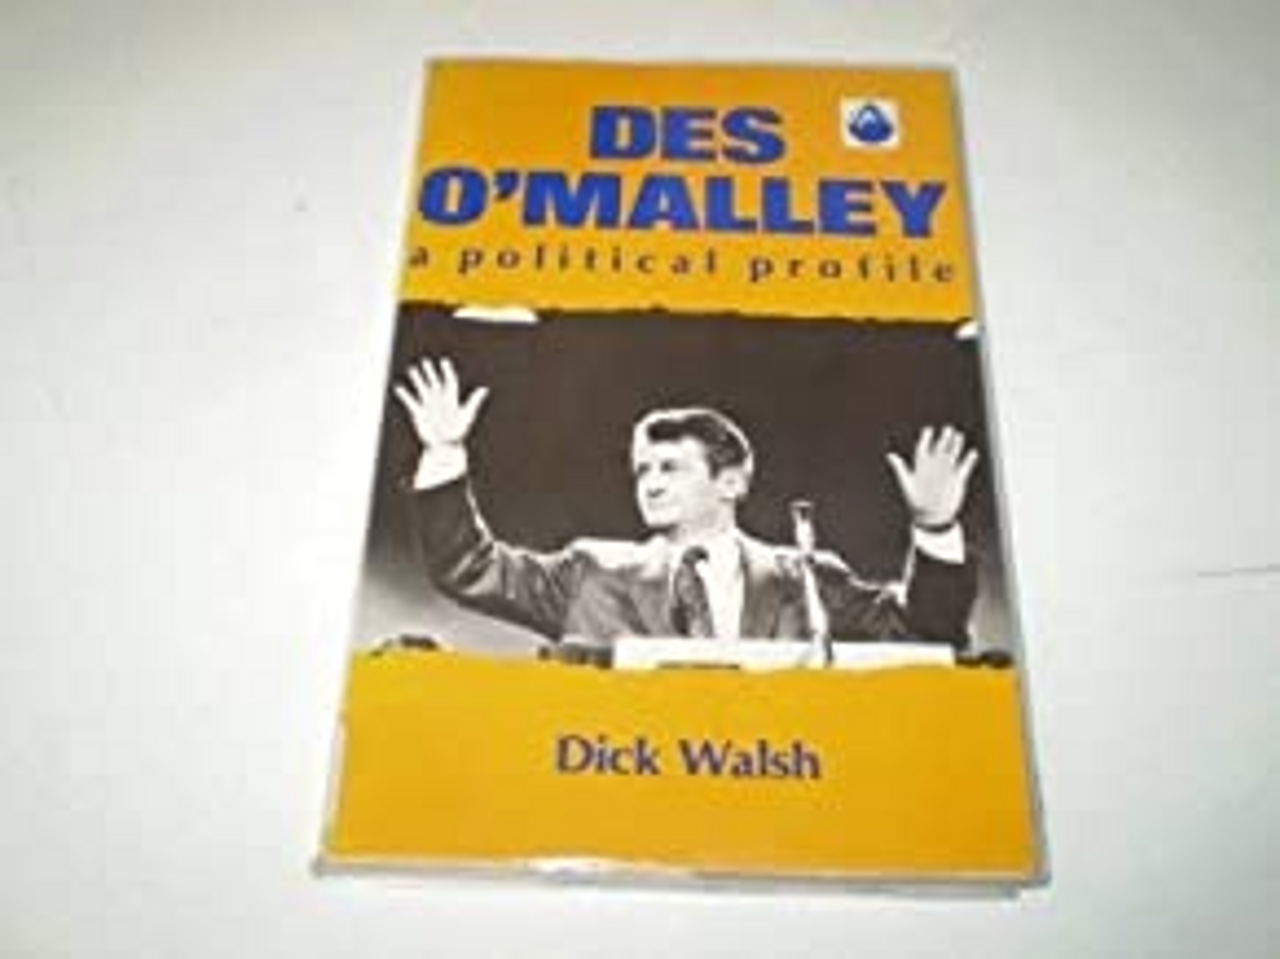 Dick Walsh / Des O'Malley: A political profile